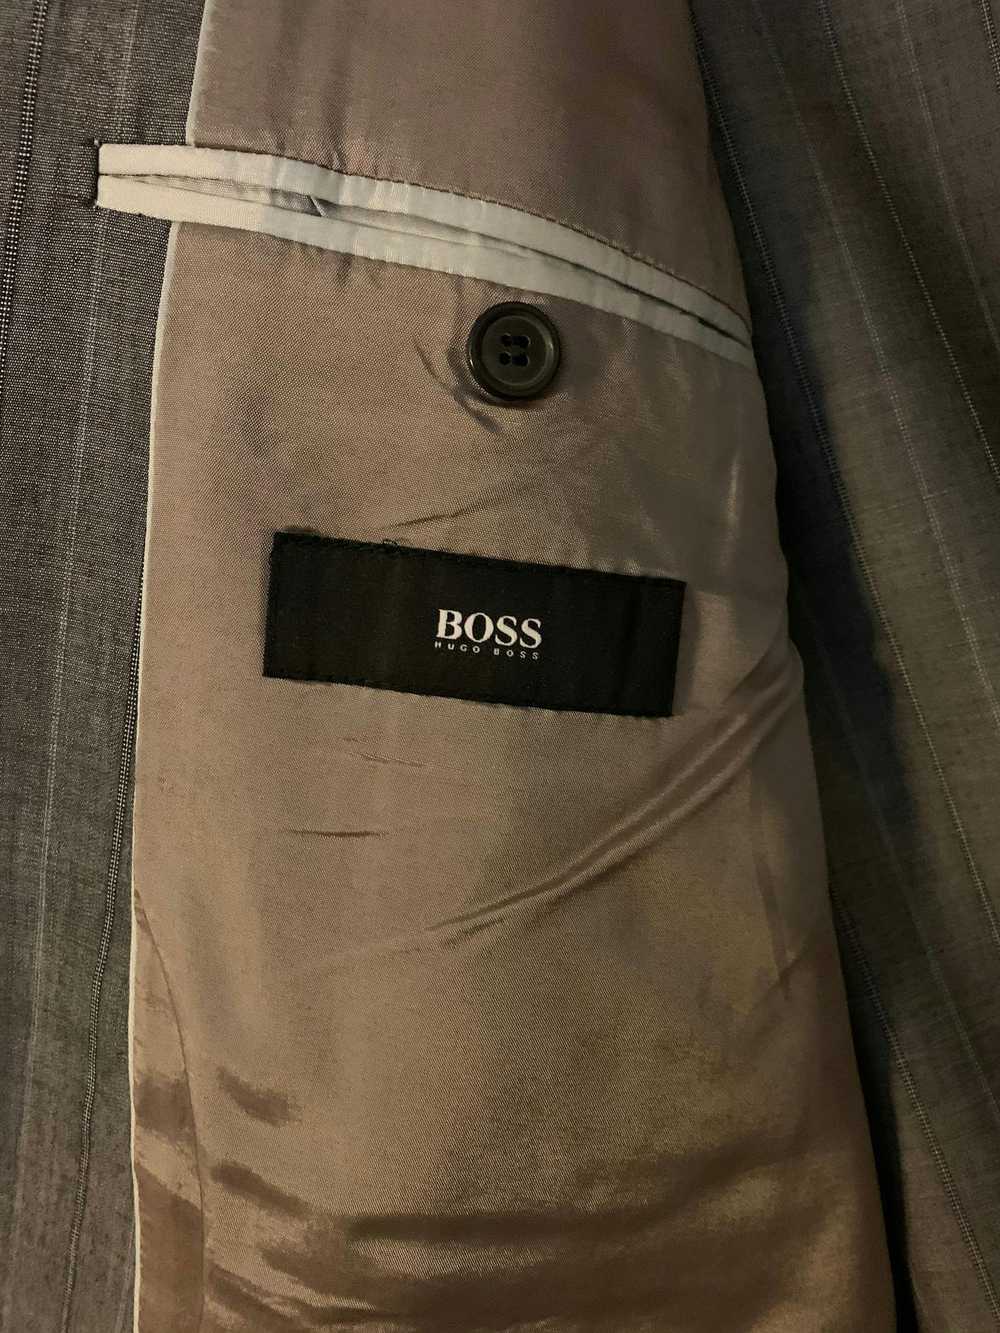 Hugo Boss Hugo Boss suit - image 4